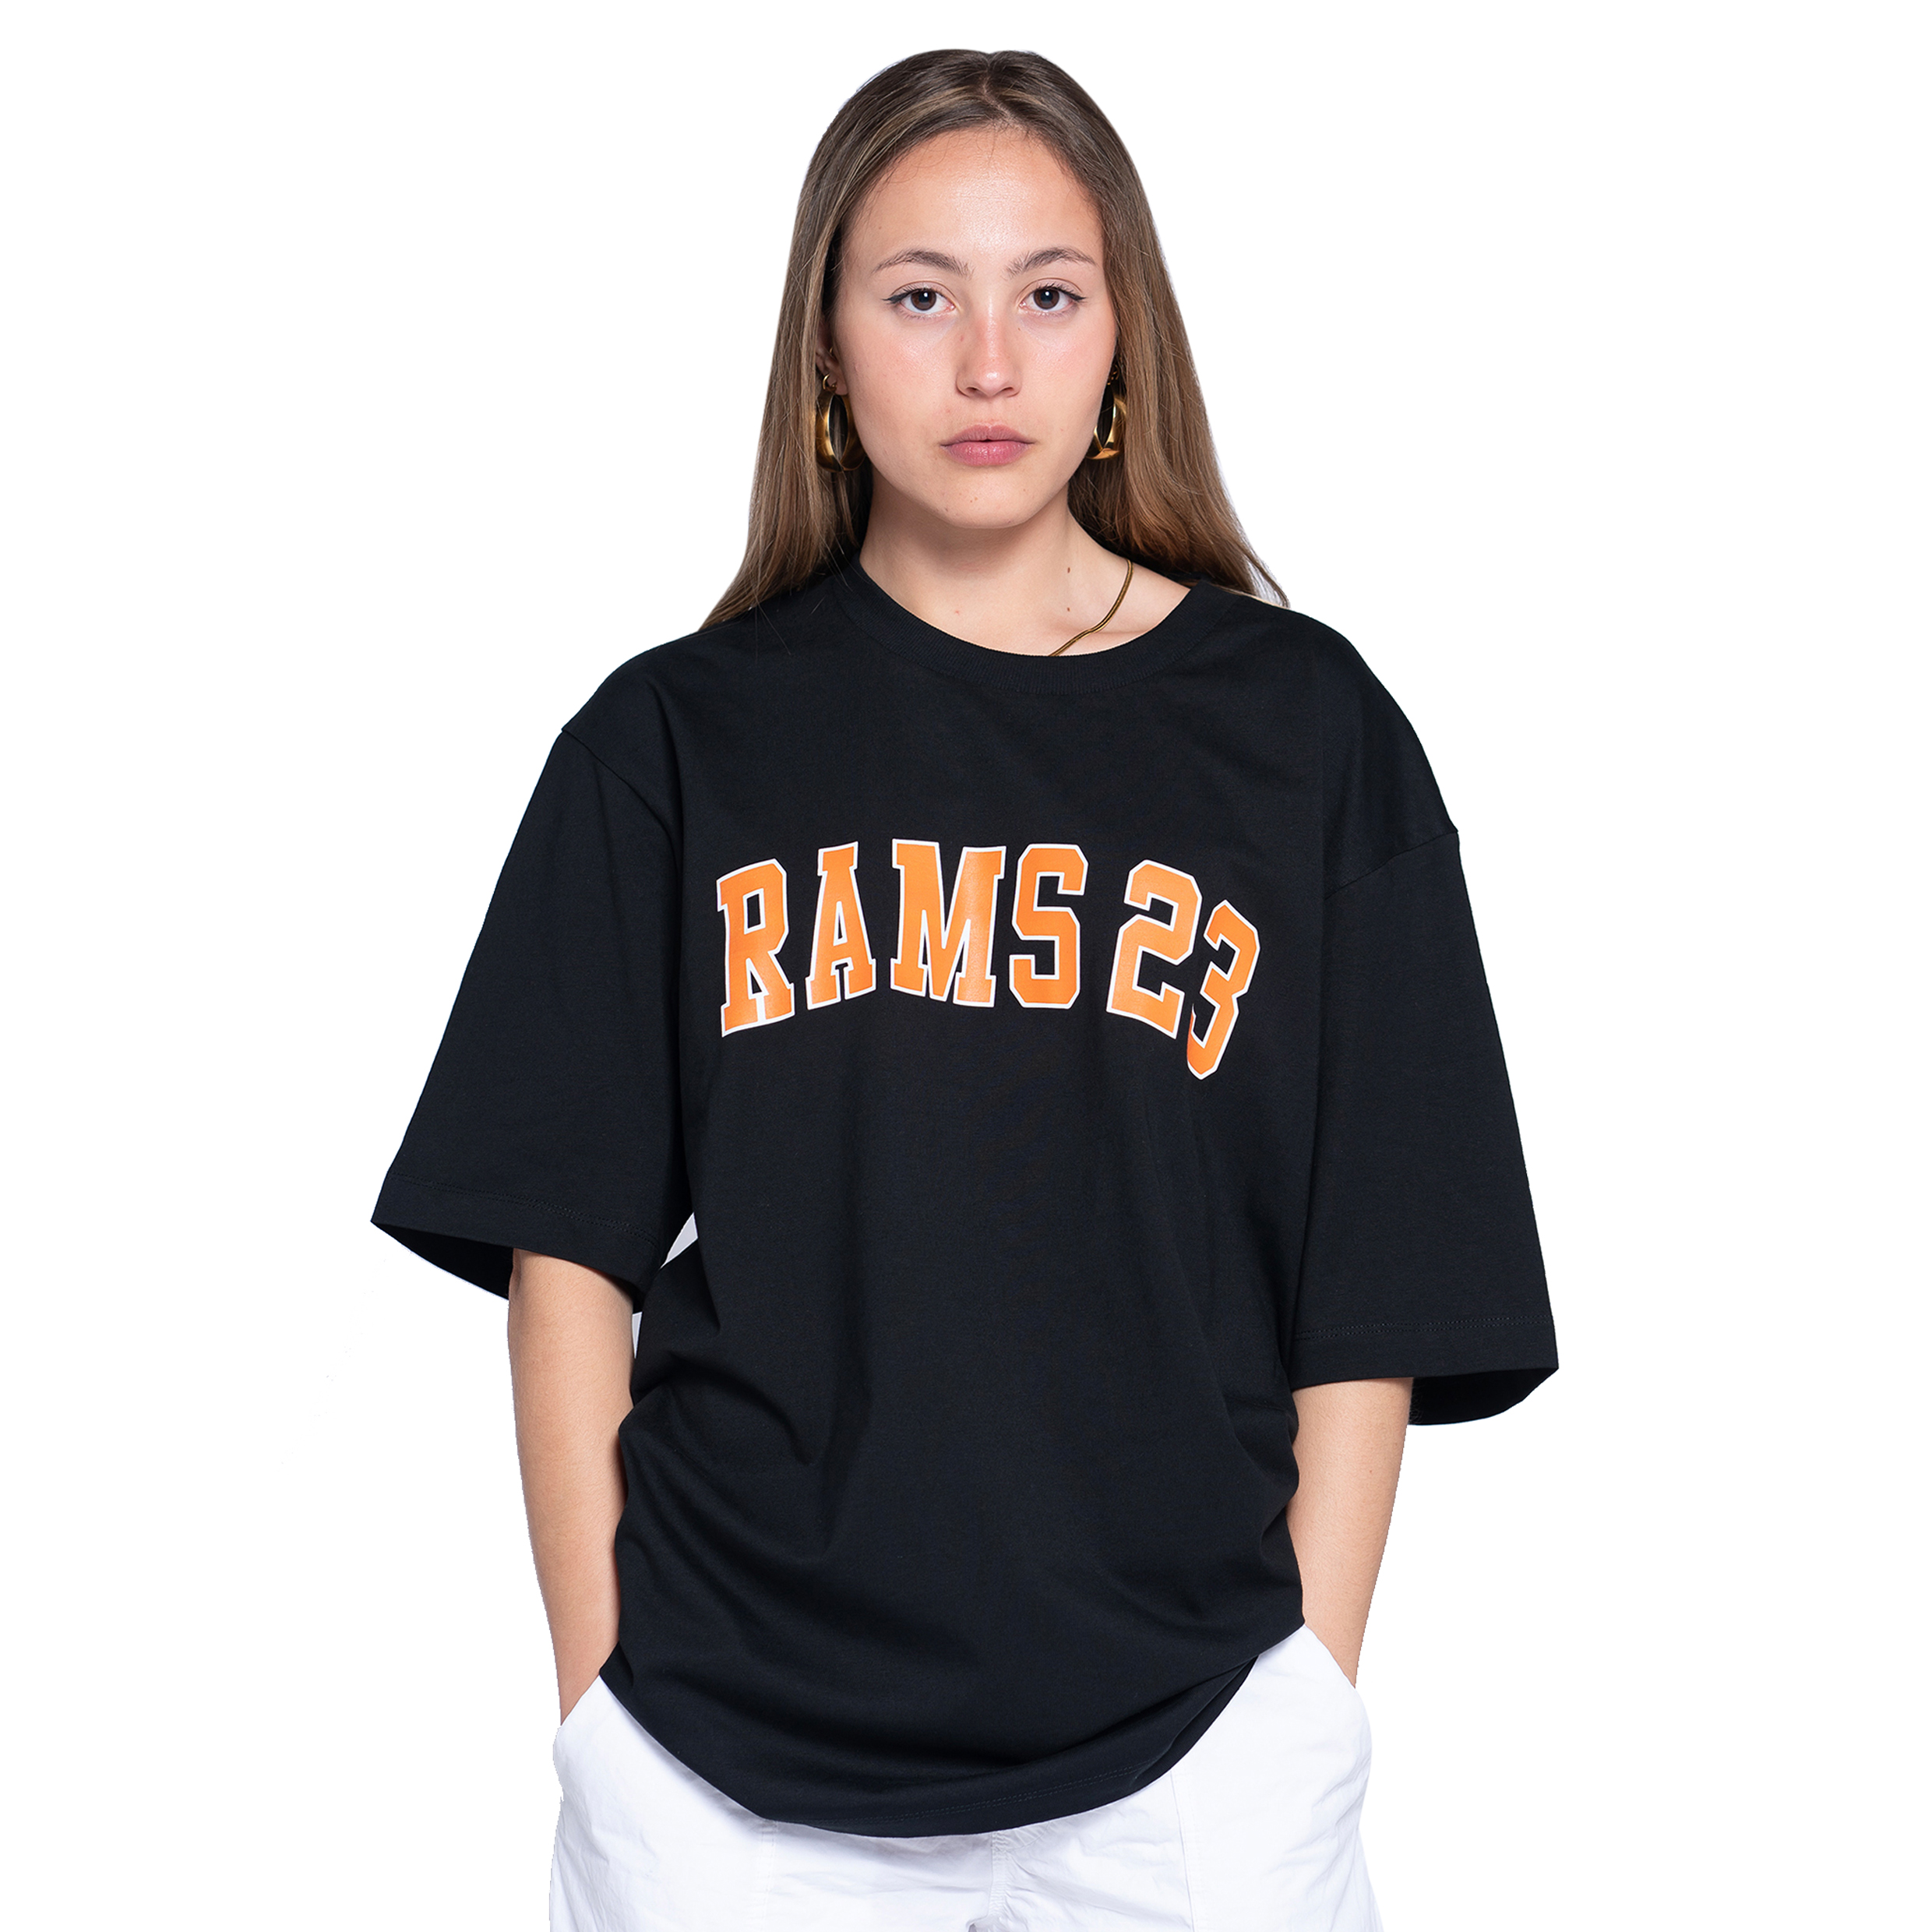 Camiseta Oversize Rams 23 University Black